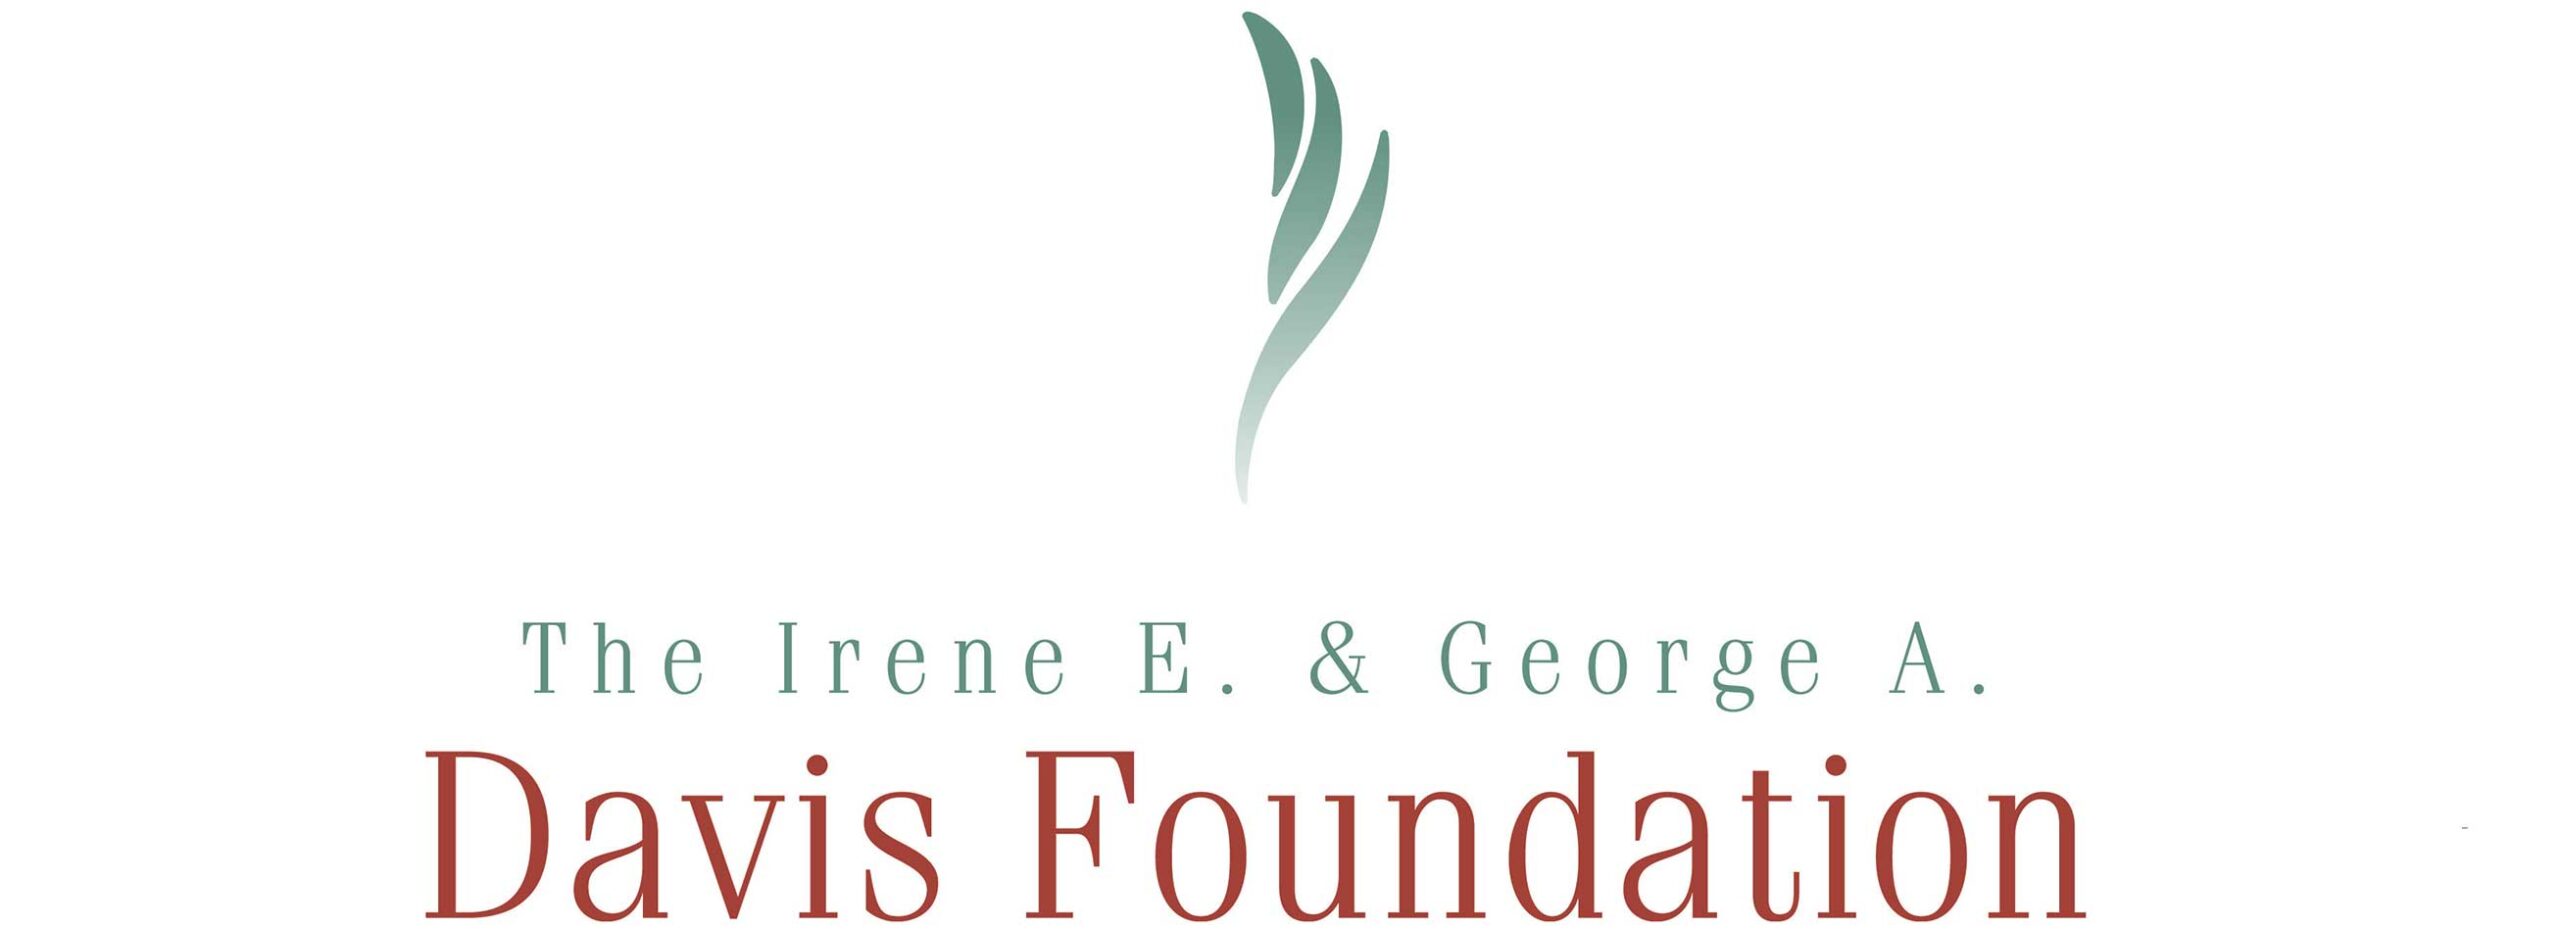 The Irene E. & George A. Davis Foundation Logo